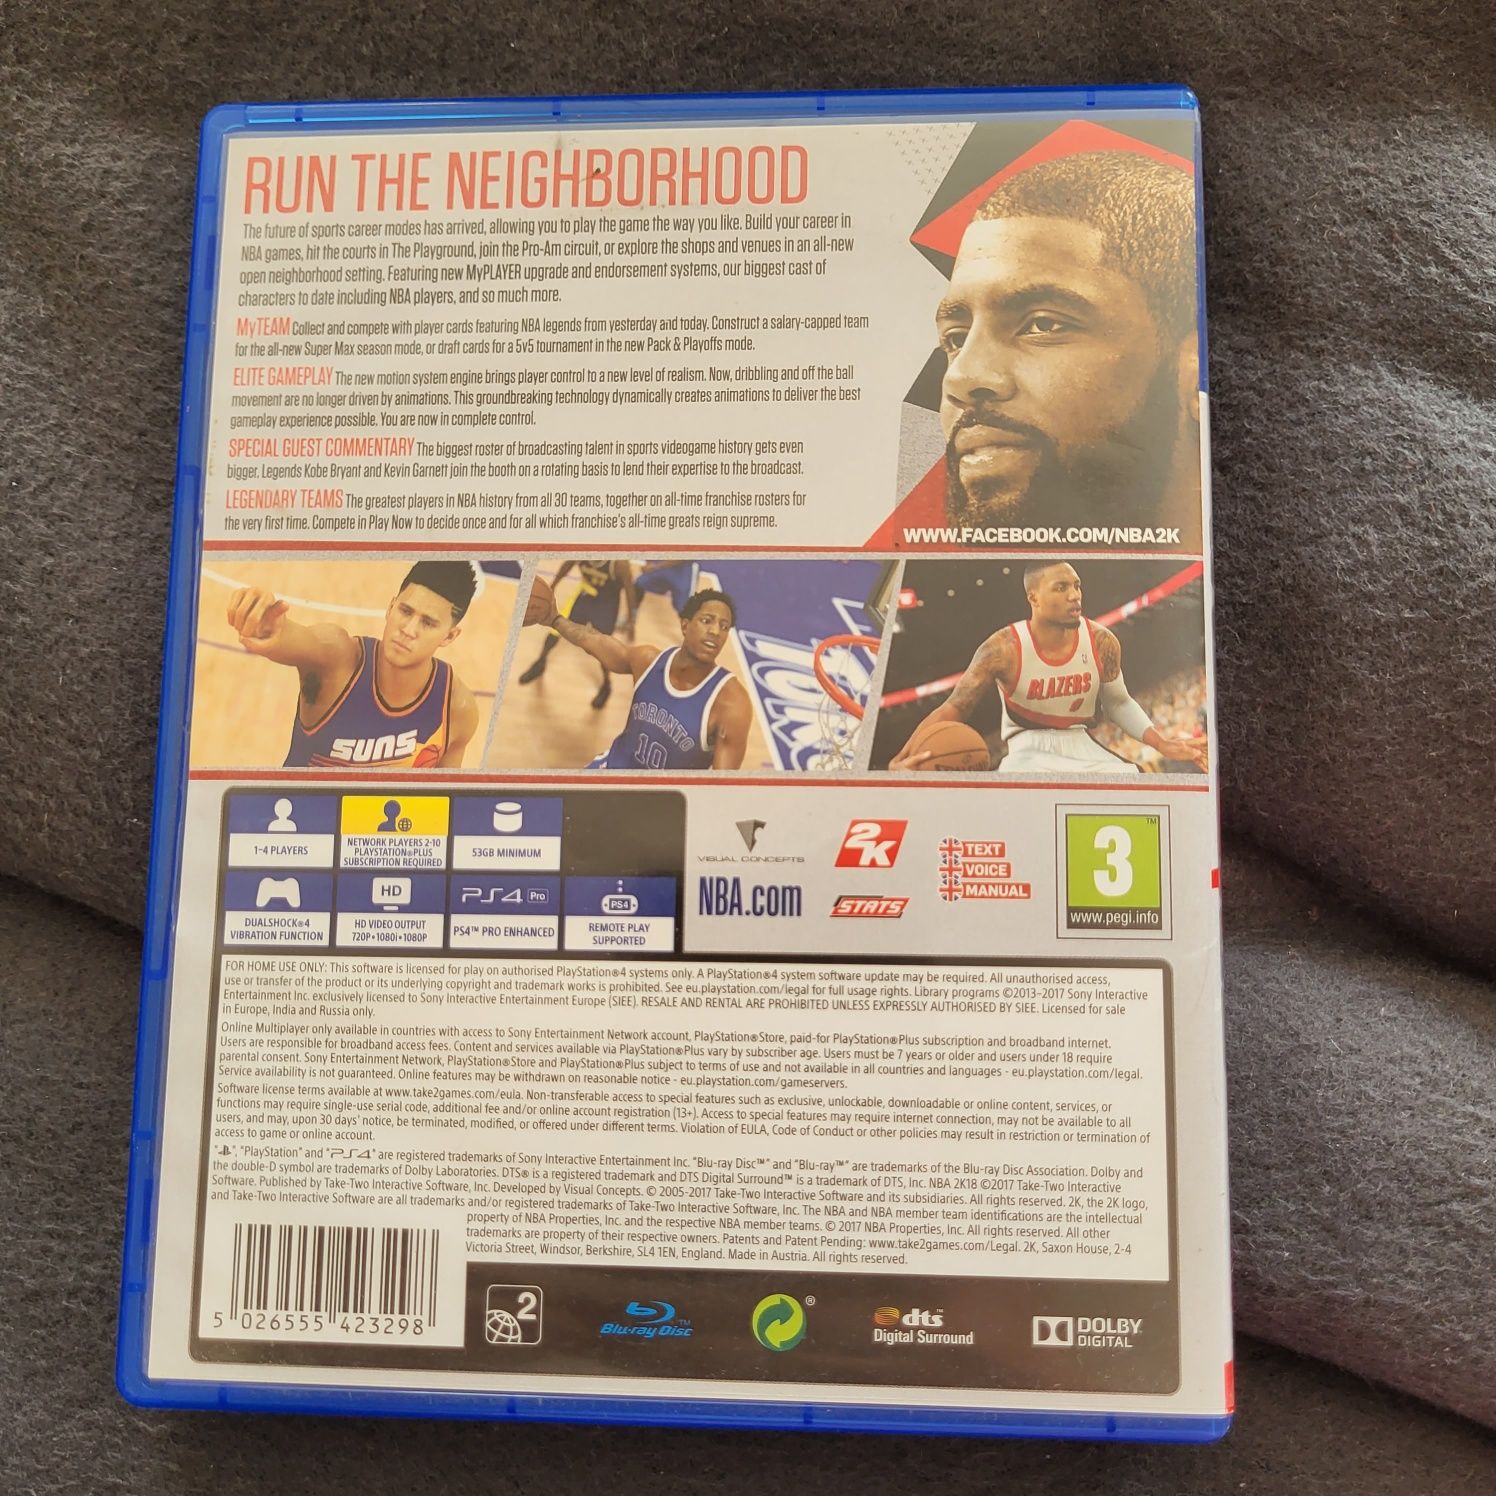 NBA2K18, gra na PS4